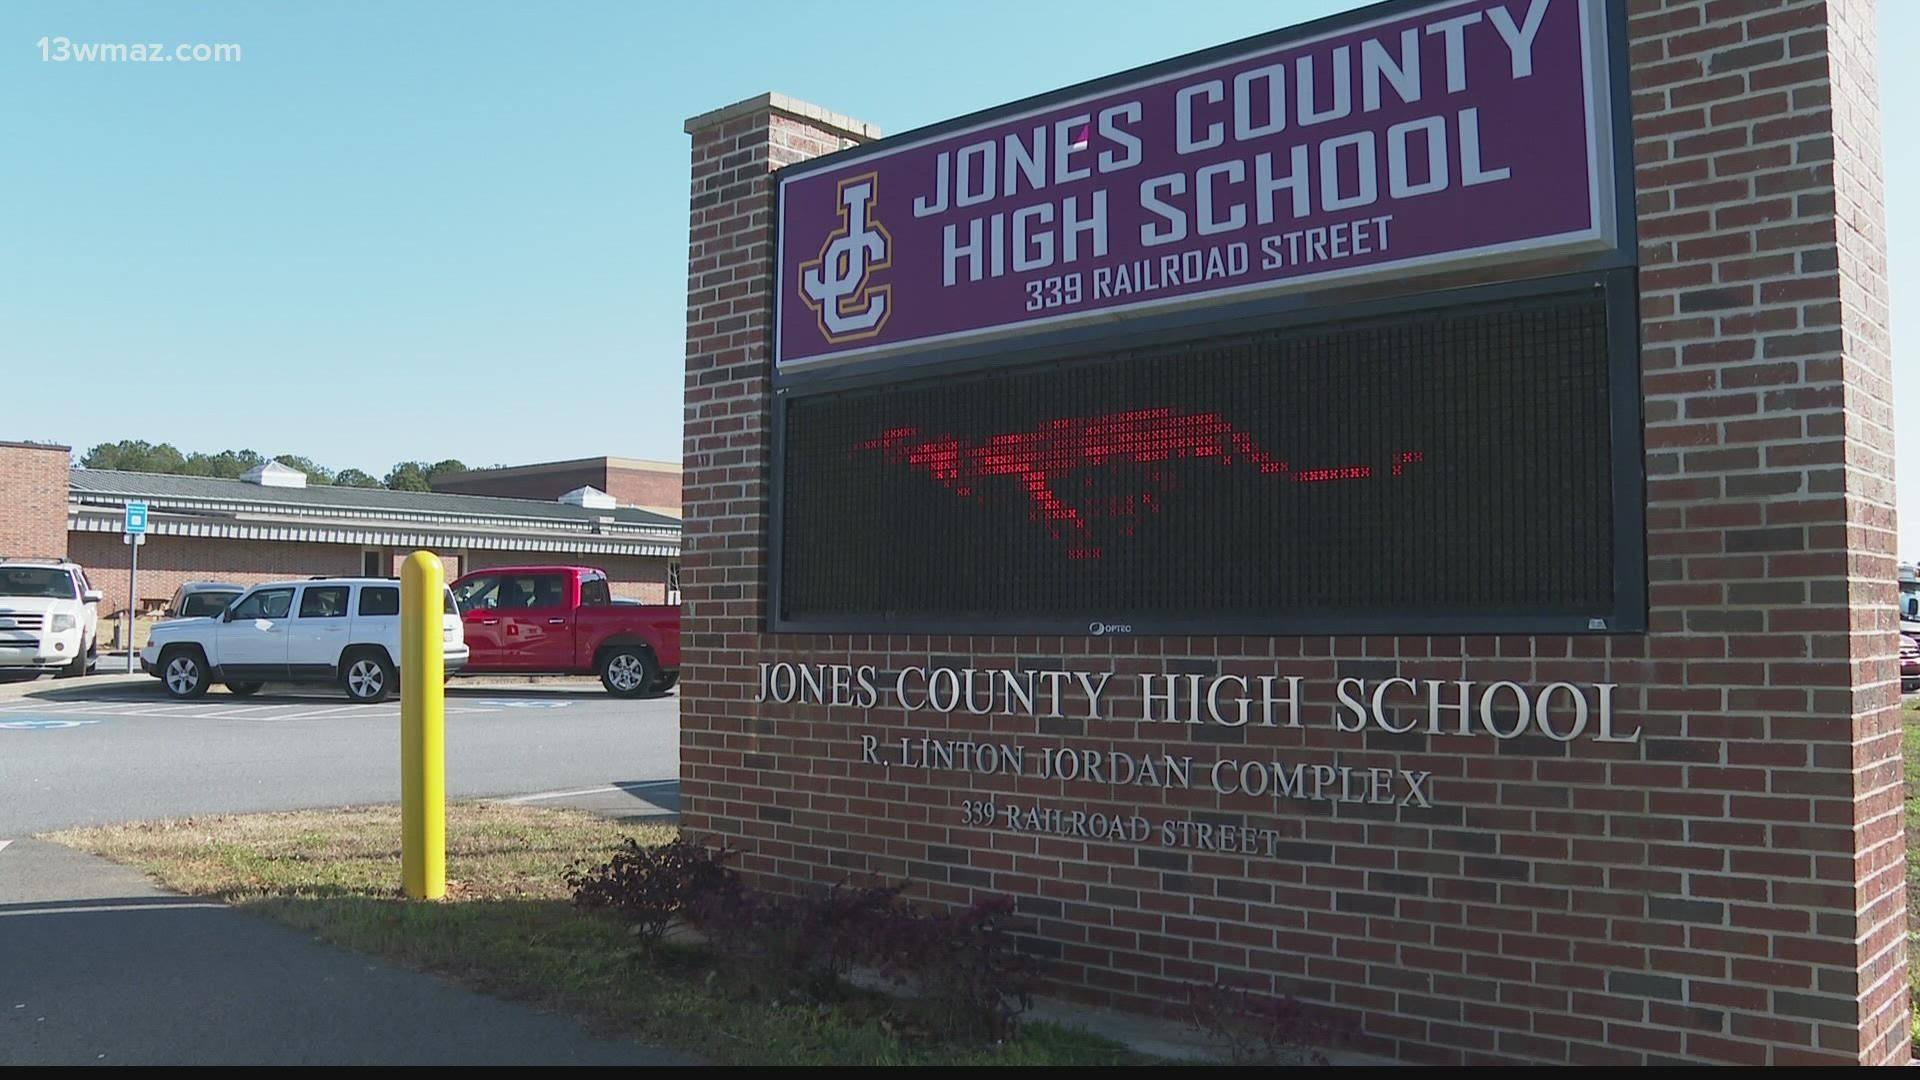 The school says administrators will start randomly screening classrooms with handheld metal detectors